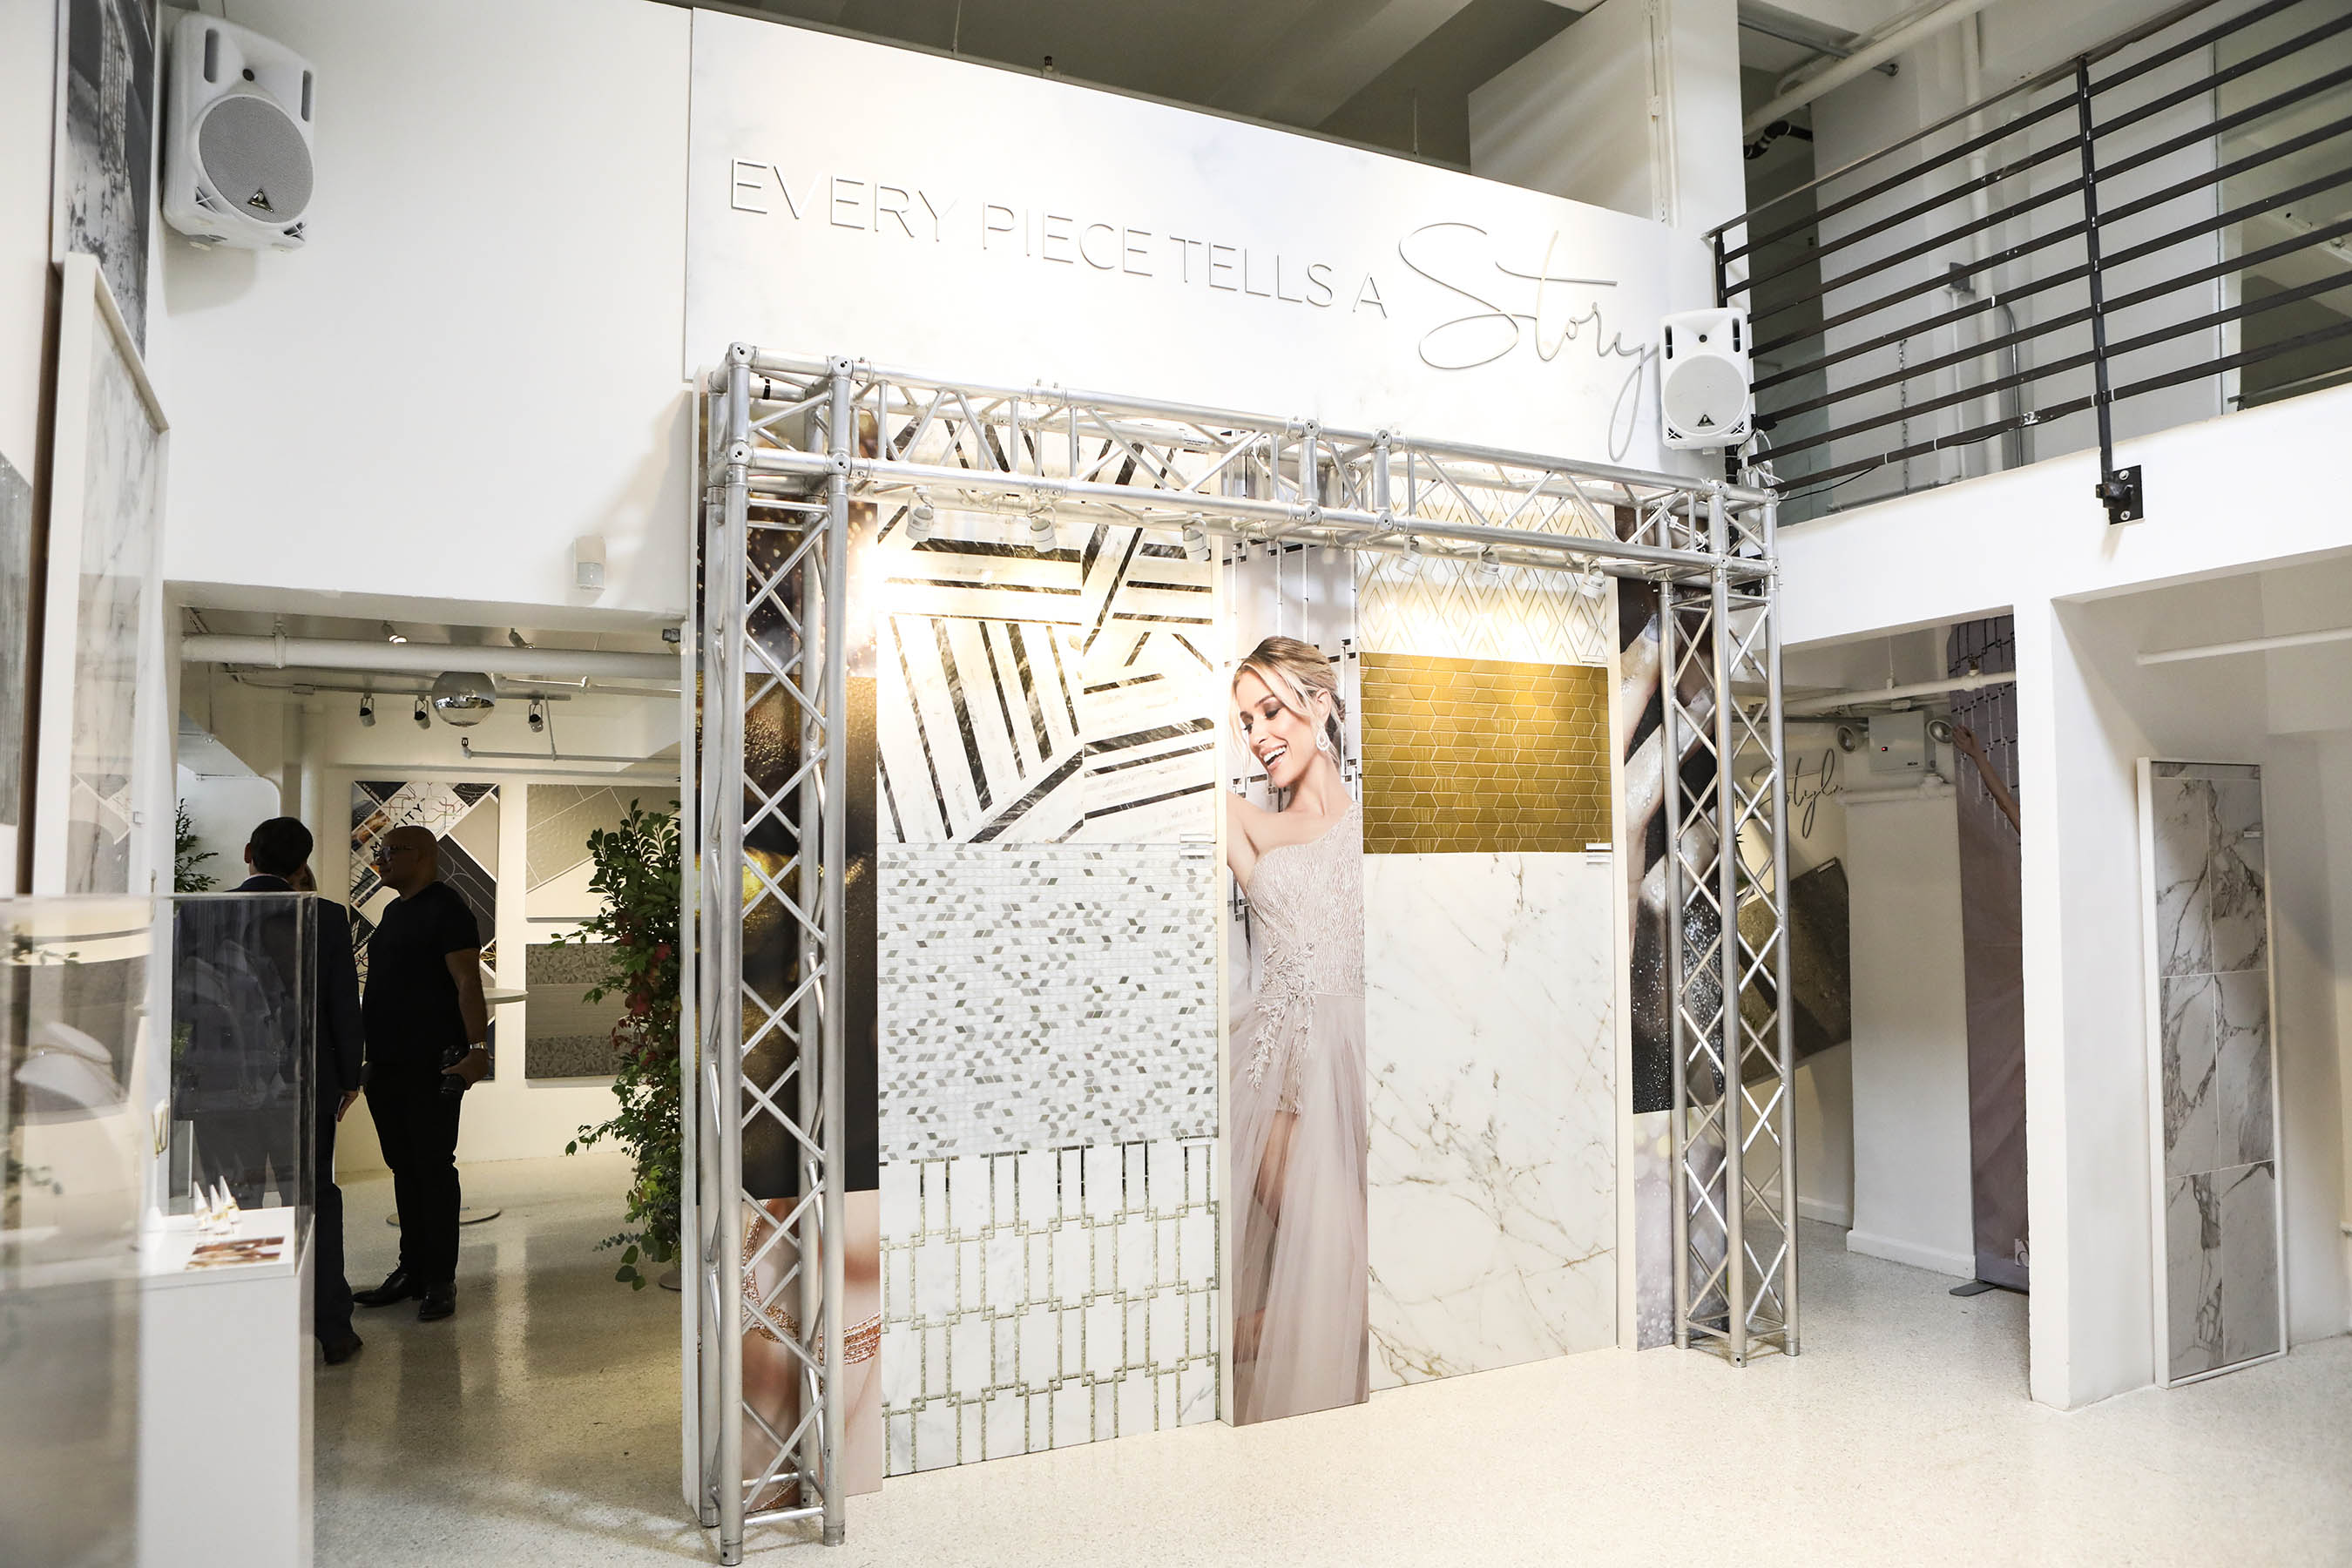 Daltile product wall at New York Fashion Week